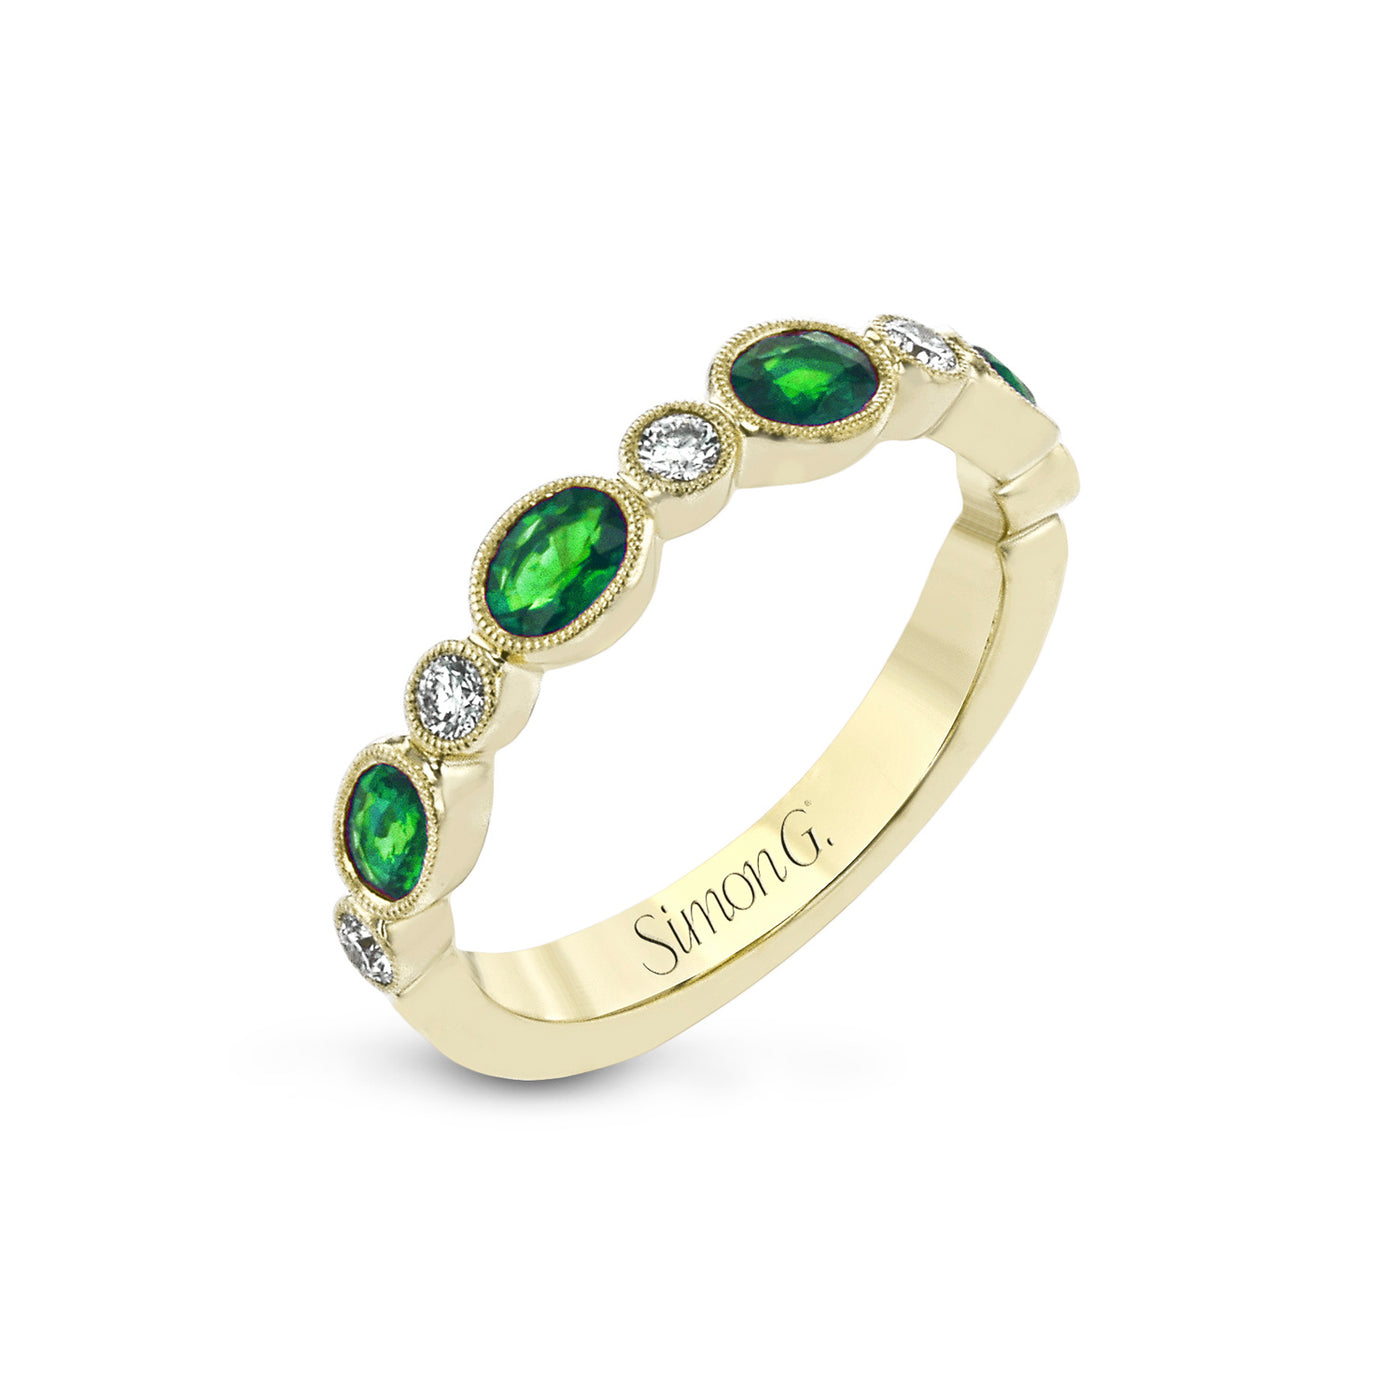 Simon G 18k Yellow Gold Emerald and Diamond Fashion Ring – LR2462-Y